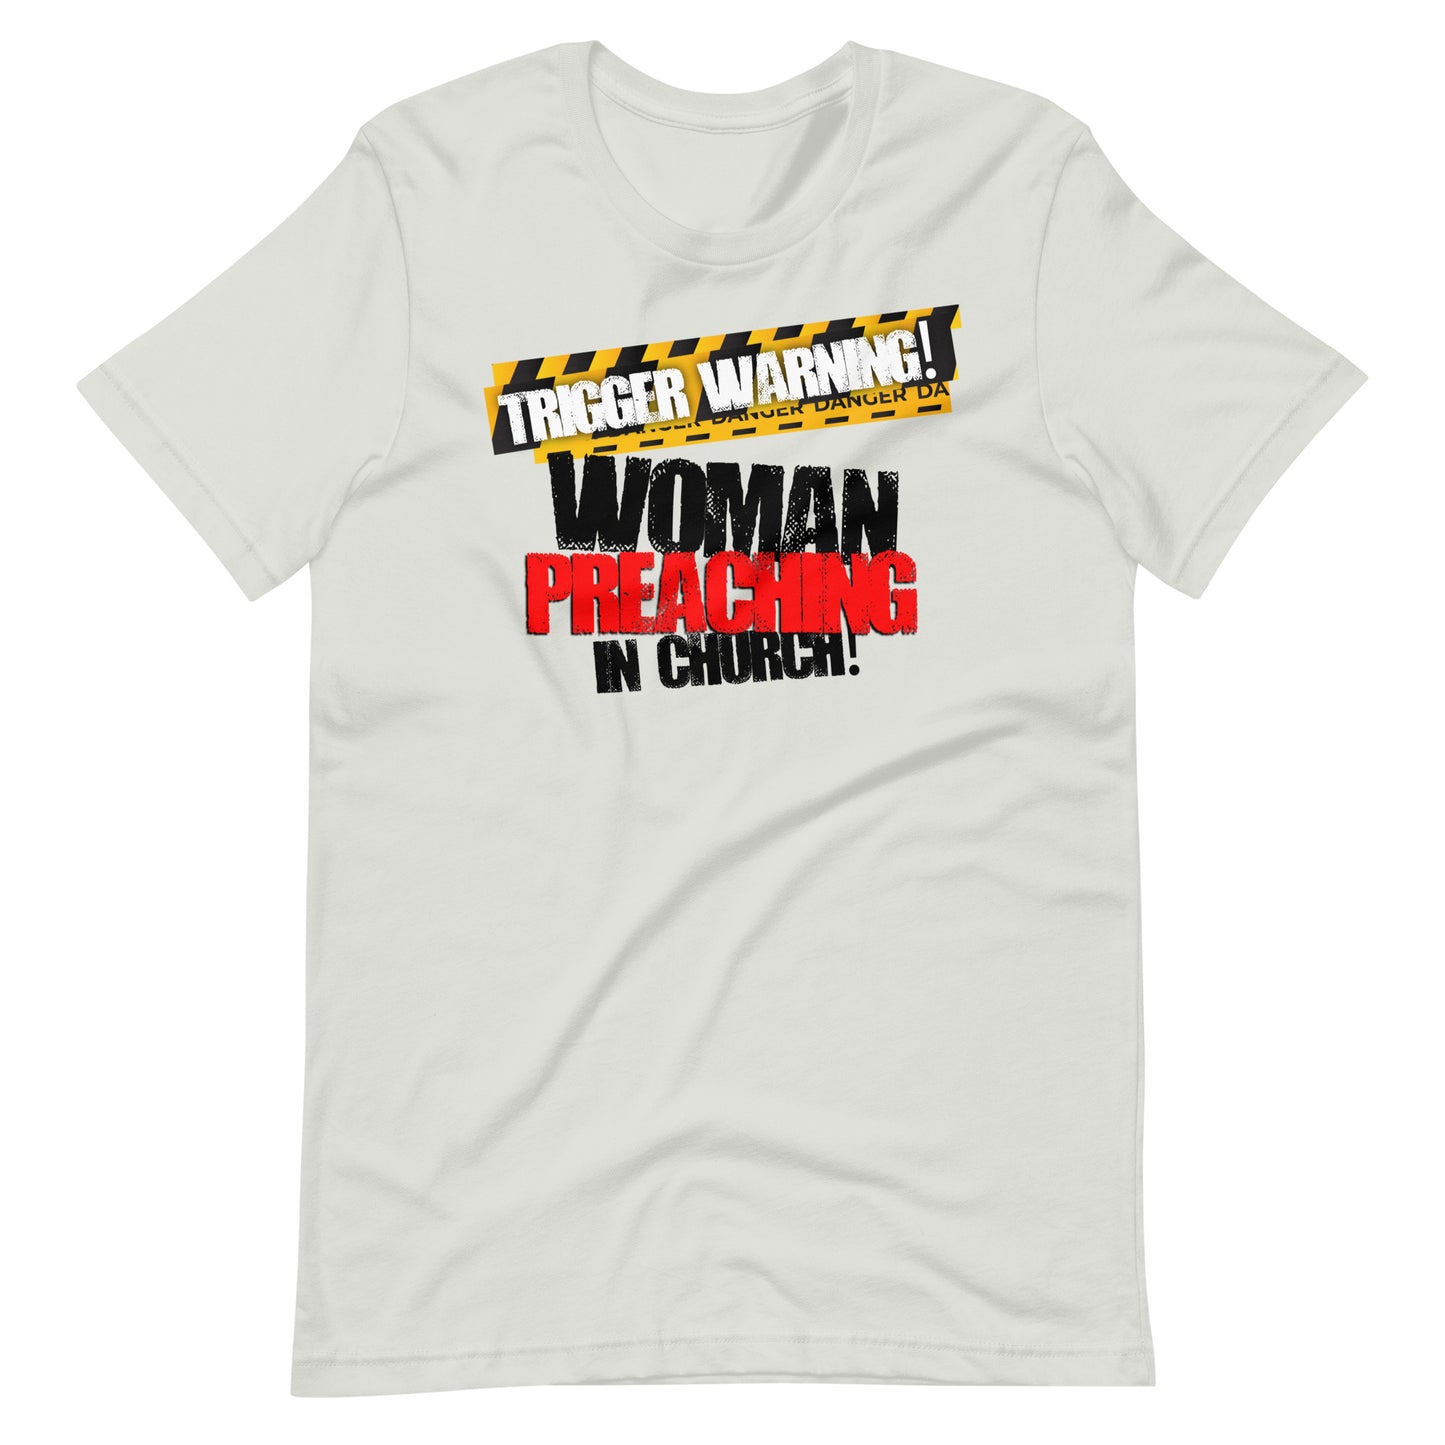 Trigger Warning! Woman Preaching Unisex T-shirt